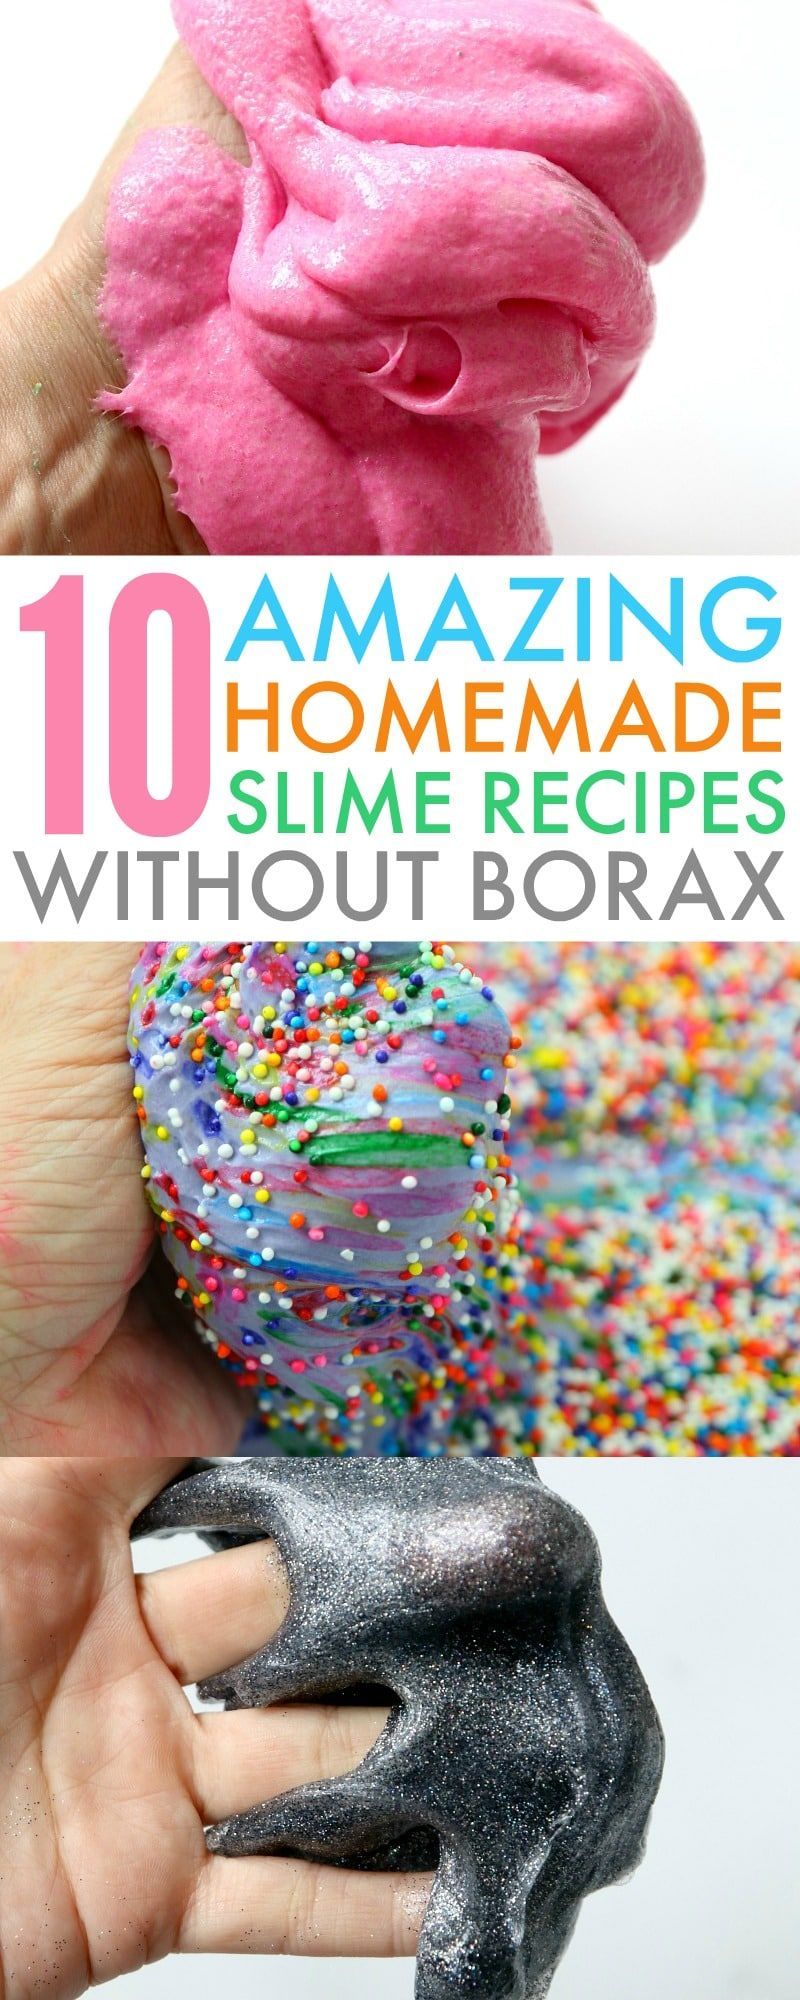 How To Make Slime Without Borax - 10 Amazing Homemade Slime Recipes - How To Make Slime Without Borax - 10 Amazing Homemade Slime Recipes -   19 diy Slime without borax ideas